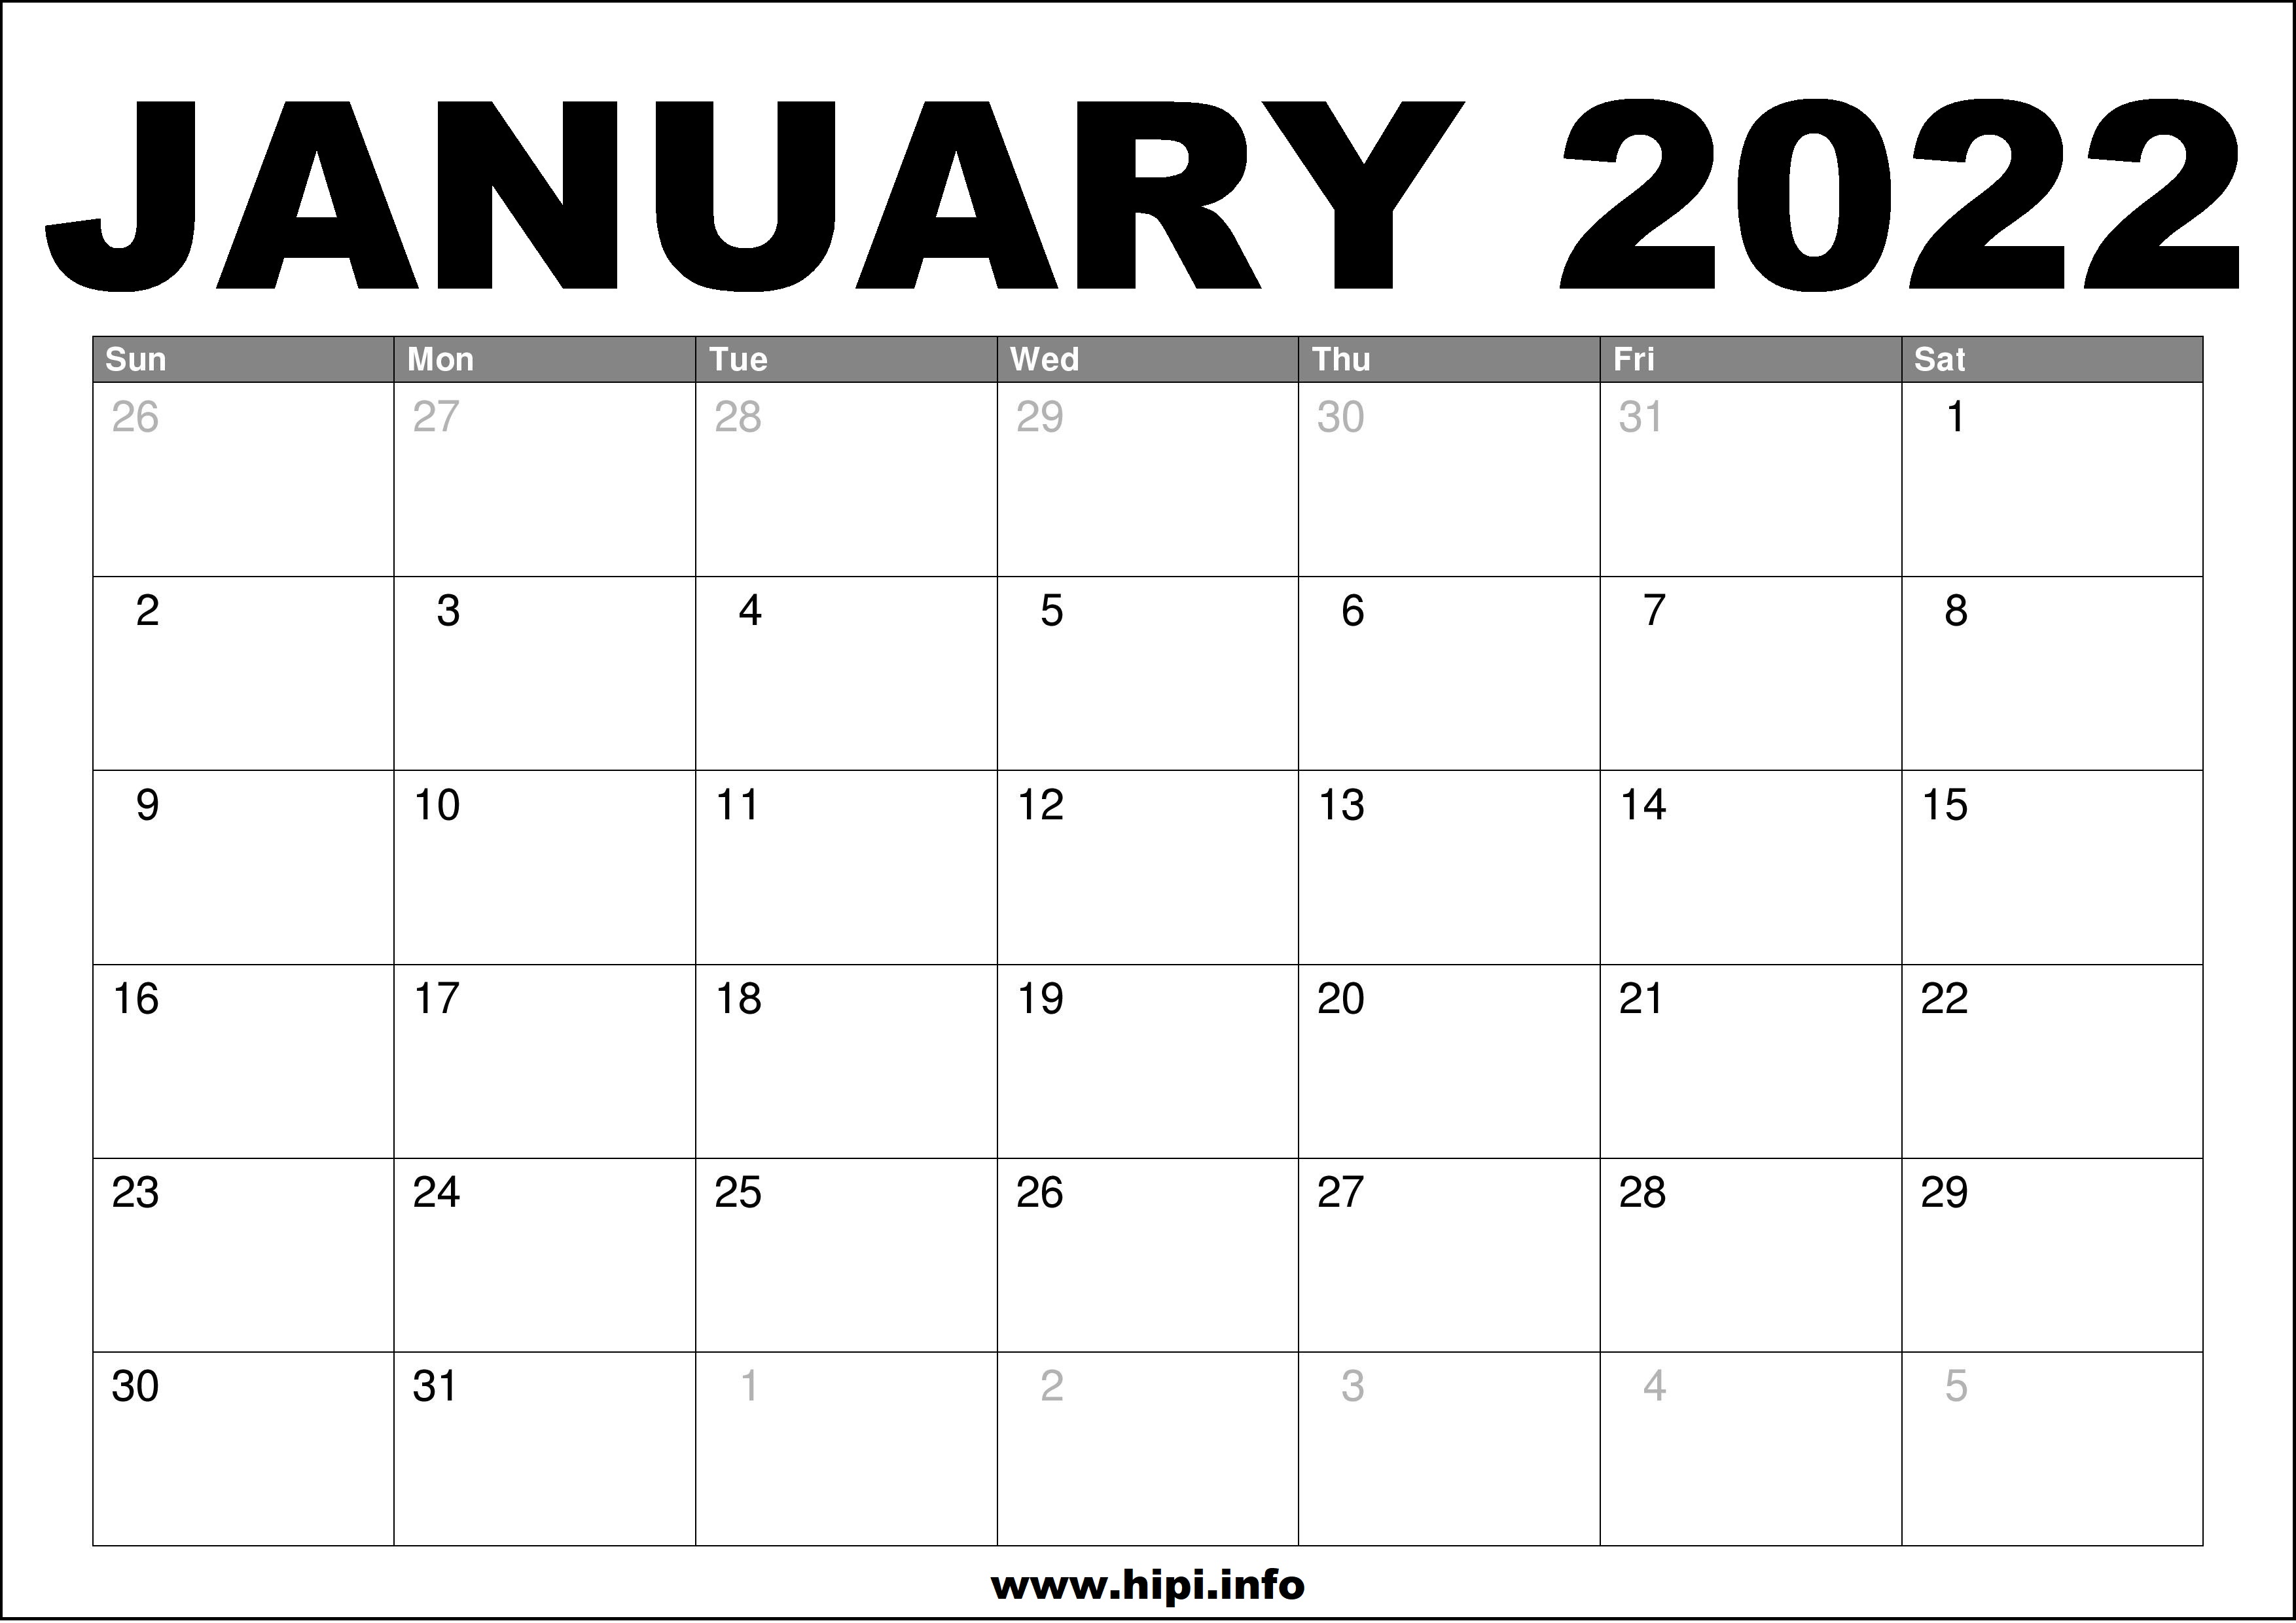 January 2022 Calendar Printable Free Hipi Info Calendars Printable Free